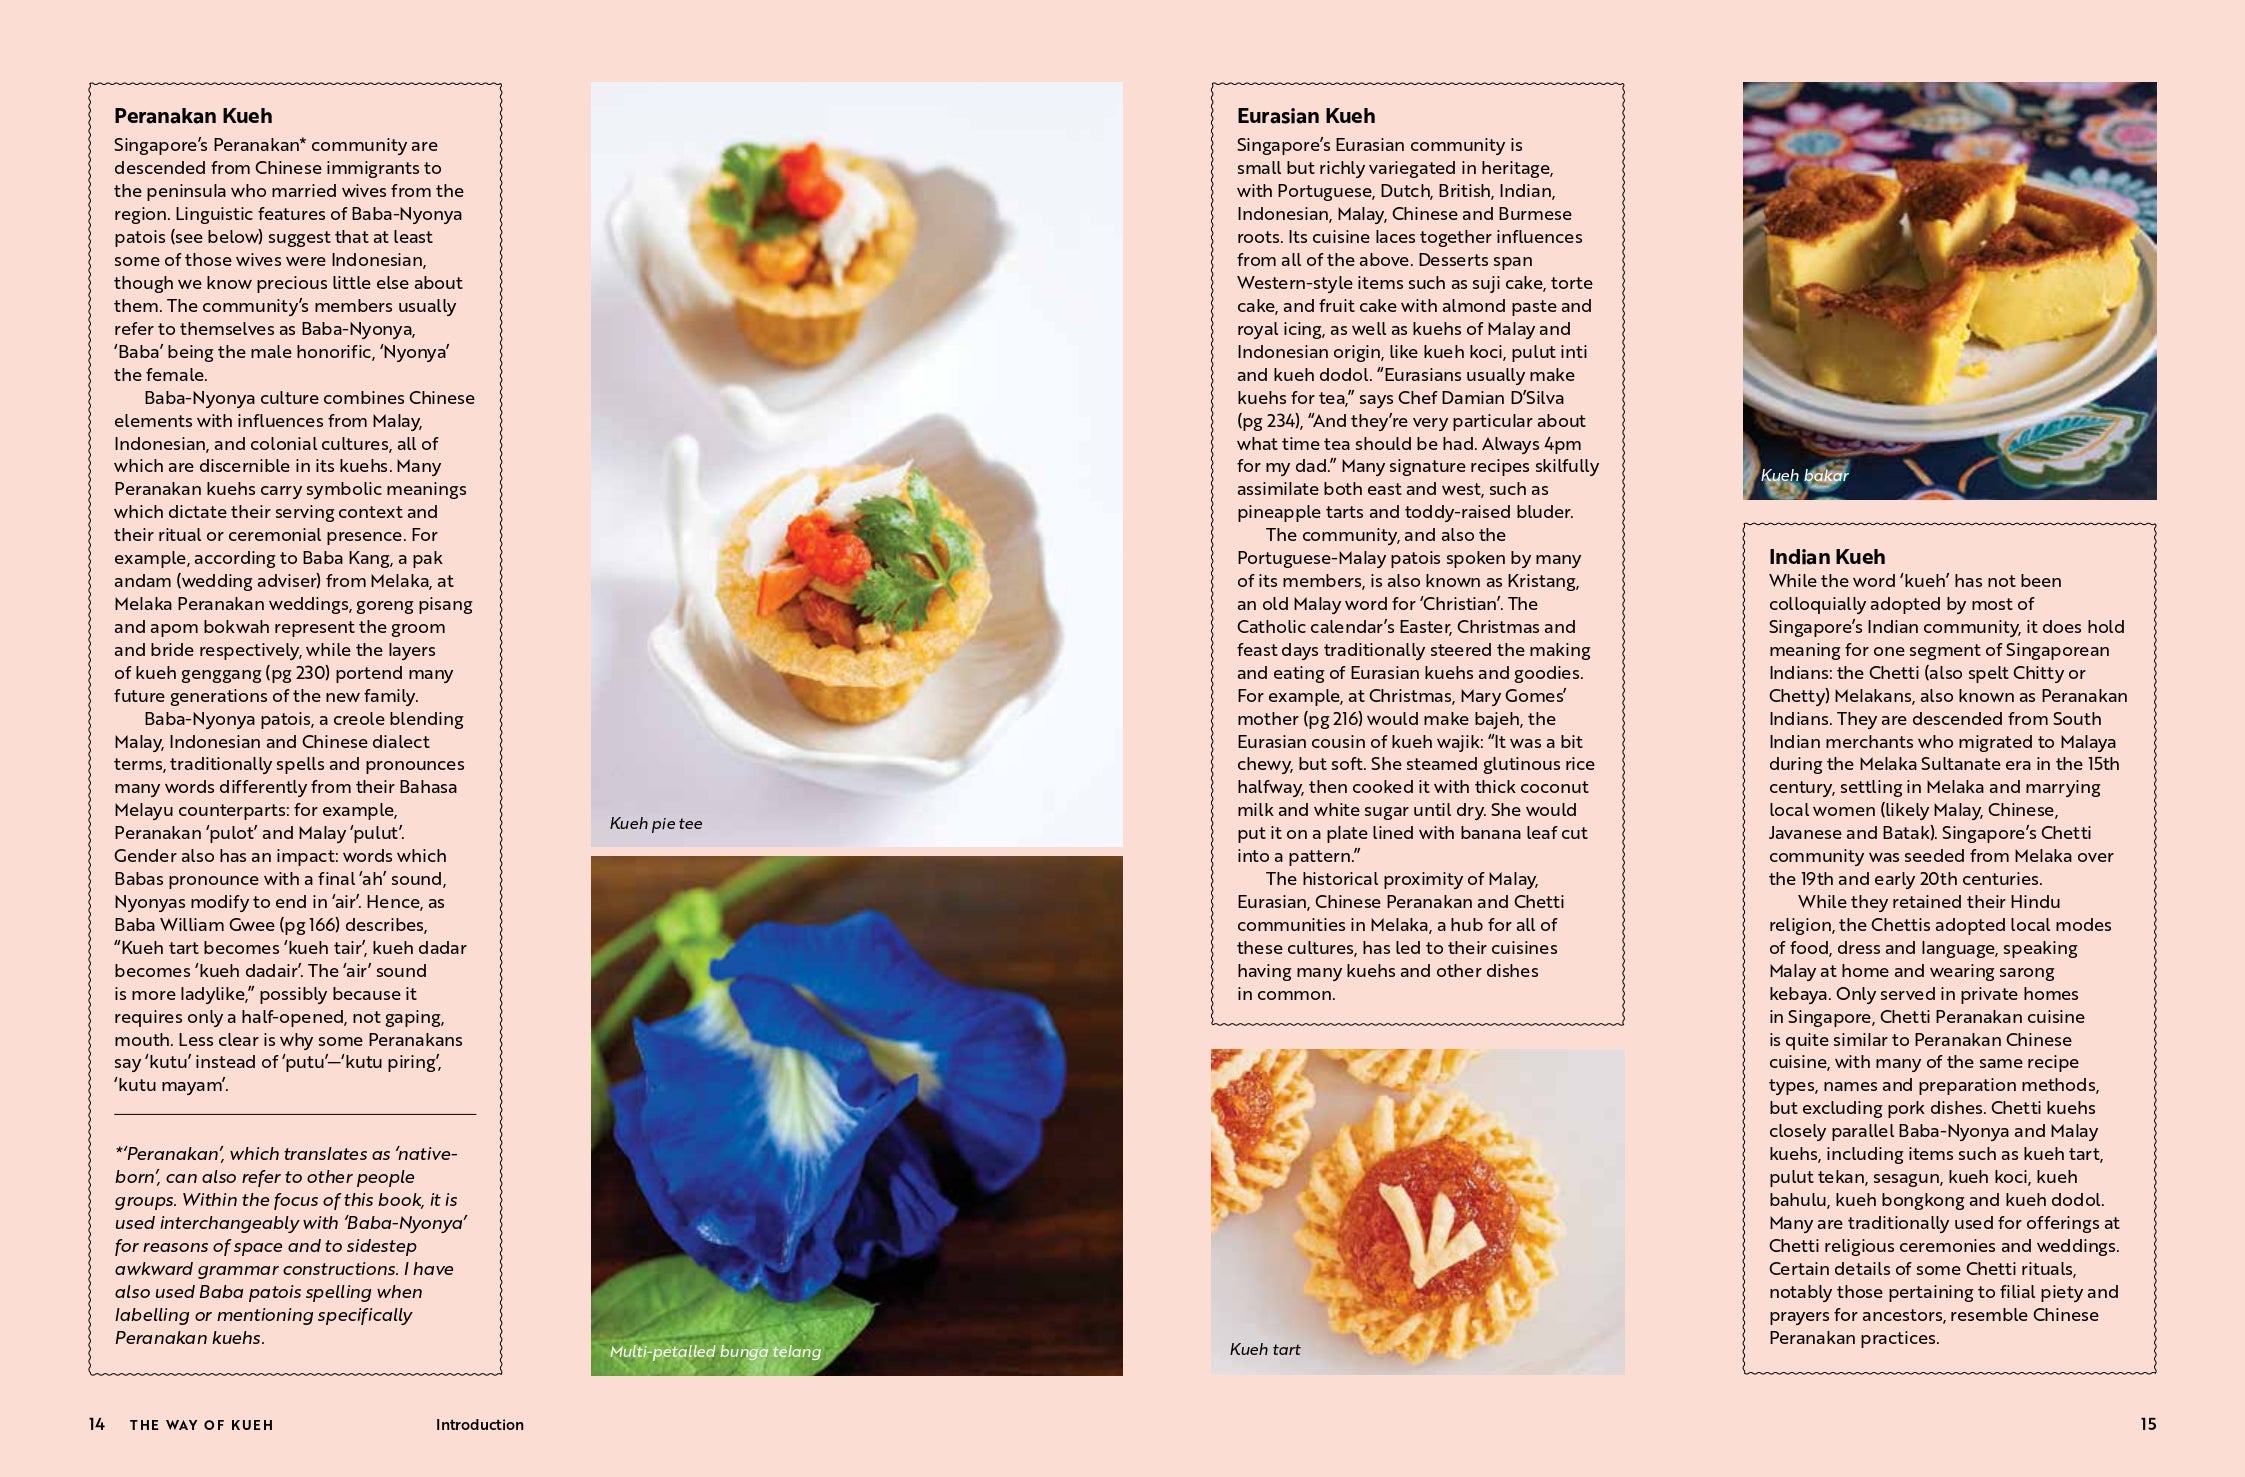 The Way of Kueh: Savouring & Saving Singapore’s Heritage Desserts